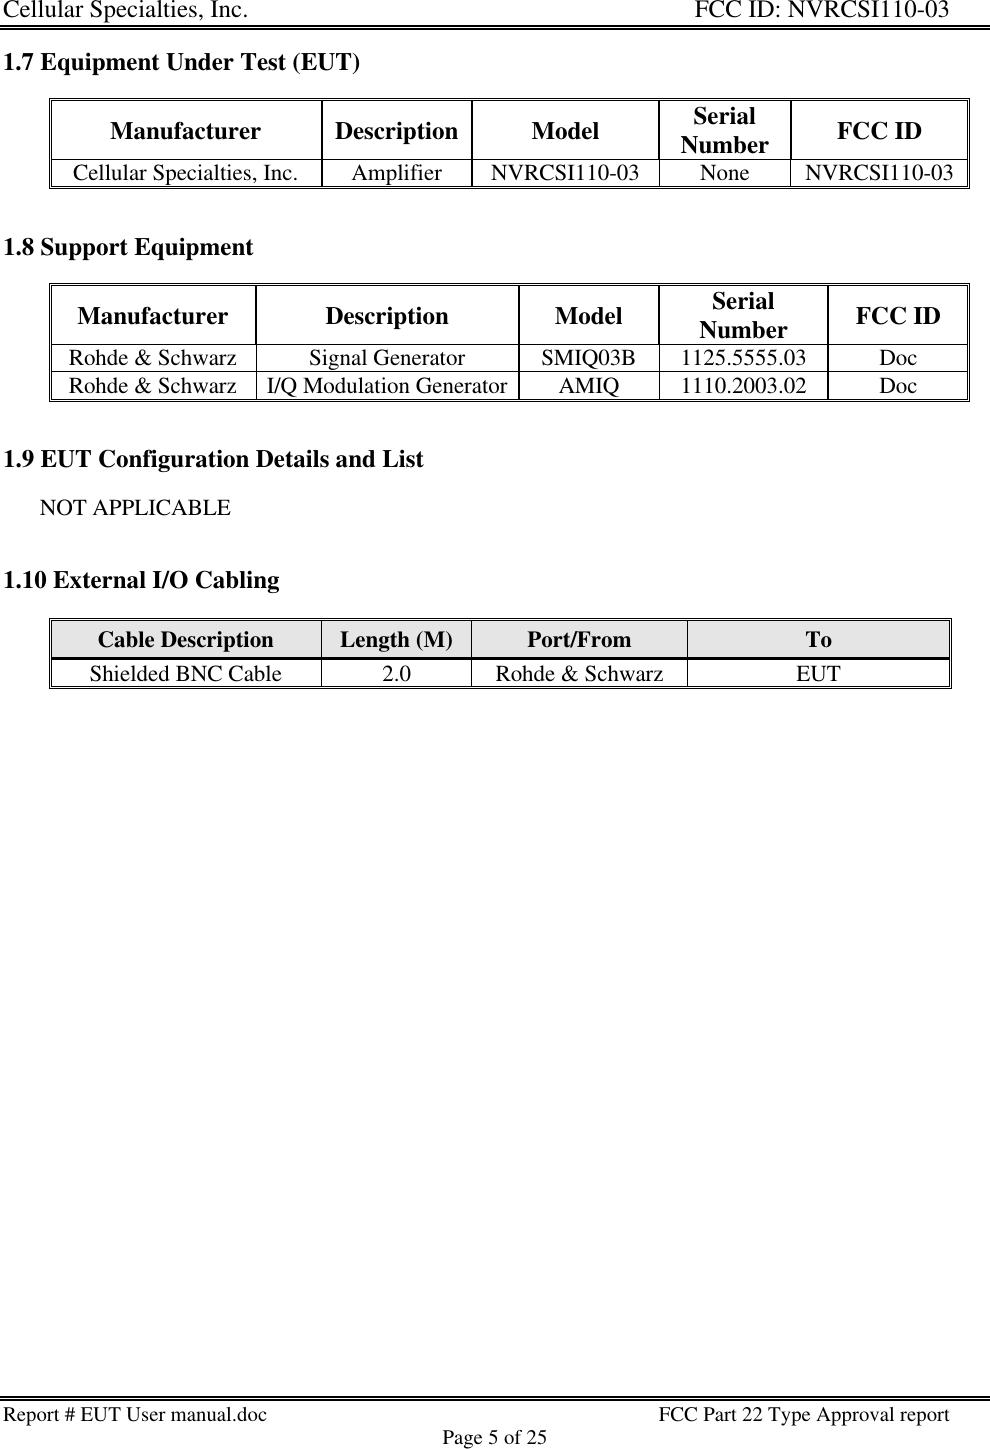 Cellular Specialties, Inc. FCC ID: NVRCSI110-03Report # EUT User manual.doc FCC Part 22 Type Approval reportPage 5 of 251.7 Equipment Under Test (EUT)Manufacturer Description Model SerialNumber FCC IDCellular Specialties, Inc. Amplifier NVRCSI110-03 None NVRCSI110-031.8 Support EquipmentManufacturer Description Model SerialNumber FCC IDRohde &amp; Schwarz Signal Generator SMIQ03B 1125.5555.03 DocRohde &amp; Schwarz I/Q Modulation Generator AMIQ 1110.2003.02 Doc1.9 EUT Configuration Details and List       NOT APPLICABLE1.10 External I/O CablingCable Description Length (M) Port/From ToShielded BNC Cable 2.0 Rohde &amp; Schwarz EUT